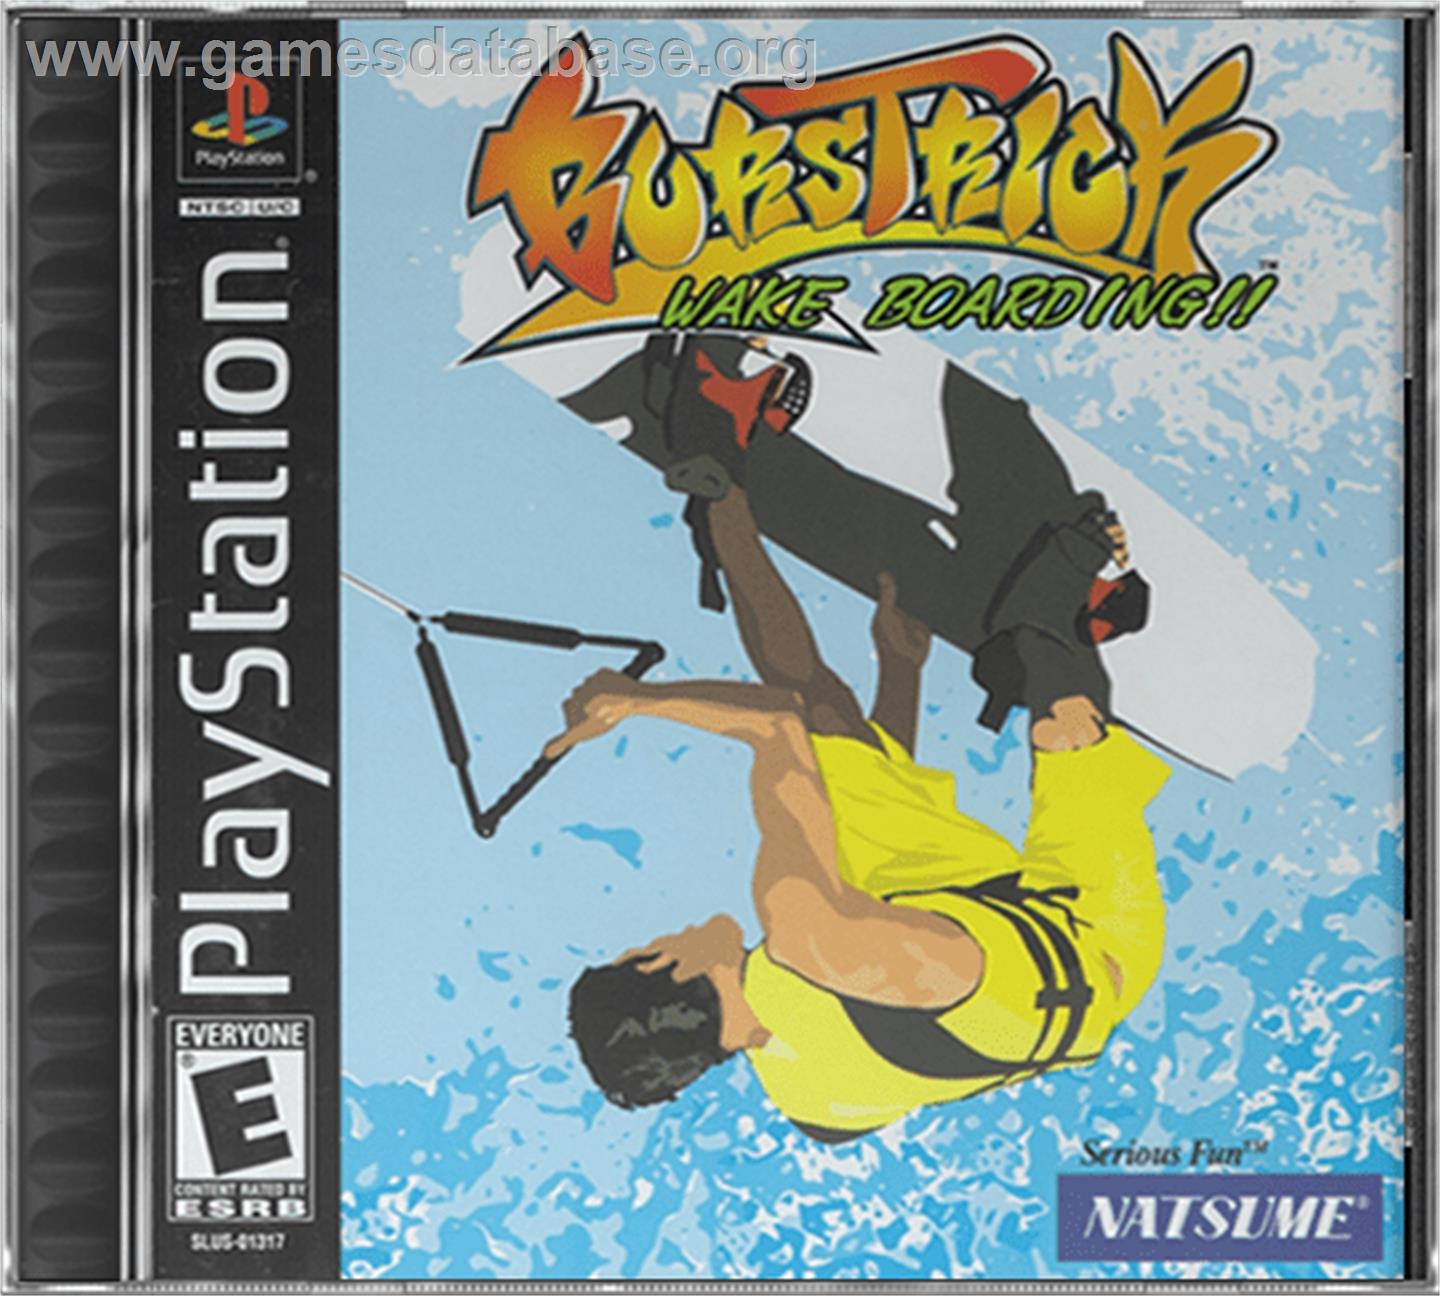 BursTrick: Wake Boarding!! - Sony Playstation - Artwork - Box